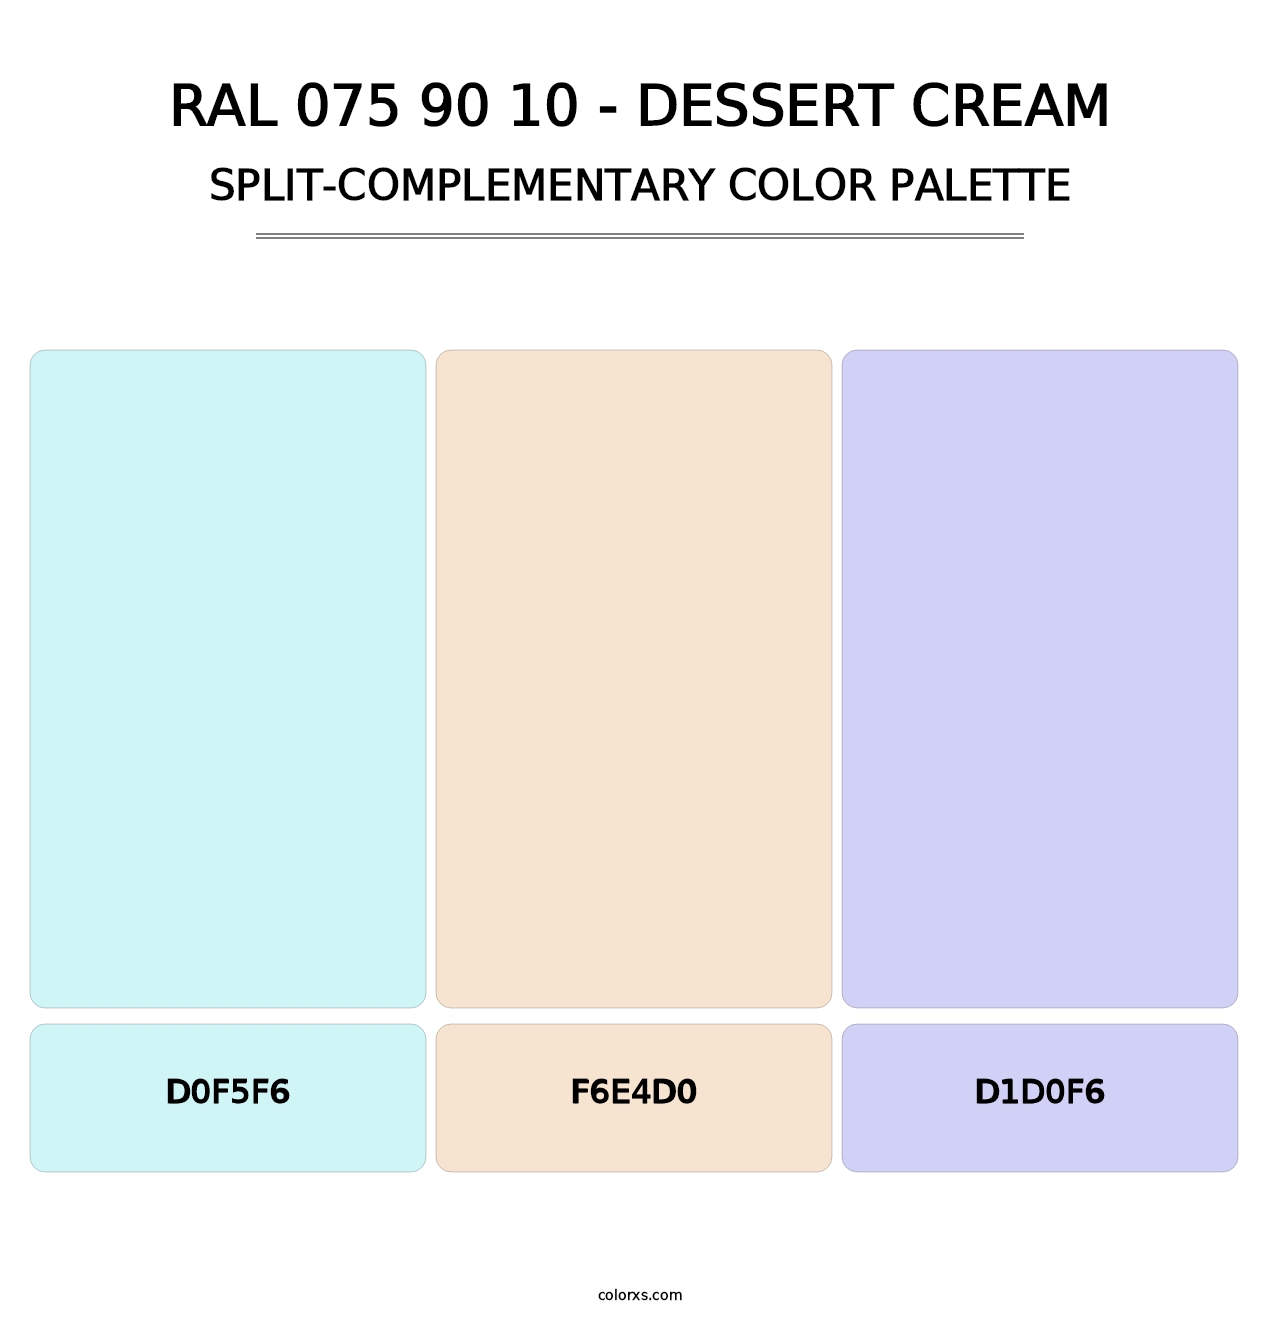 RAL 075 90 10 - Dessert Cream - Split-Complementary Color Palette